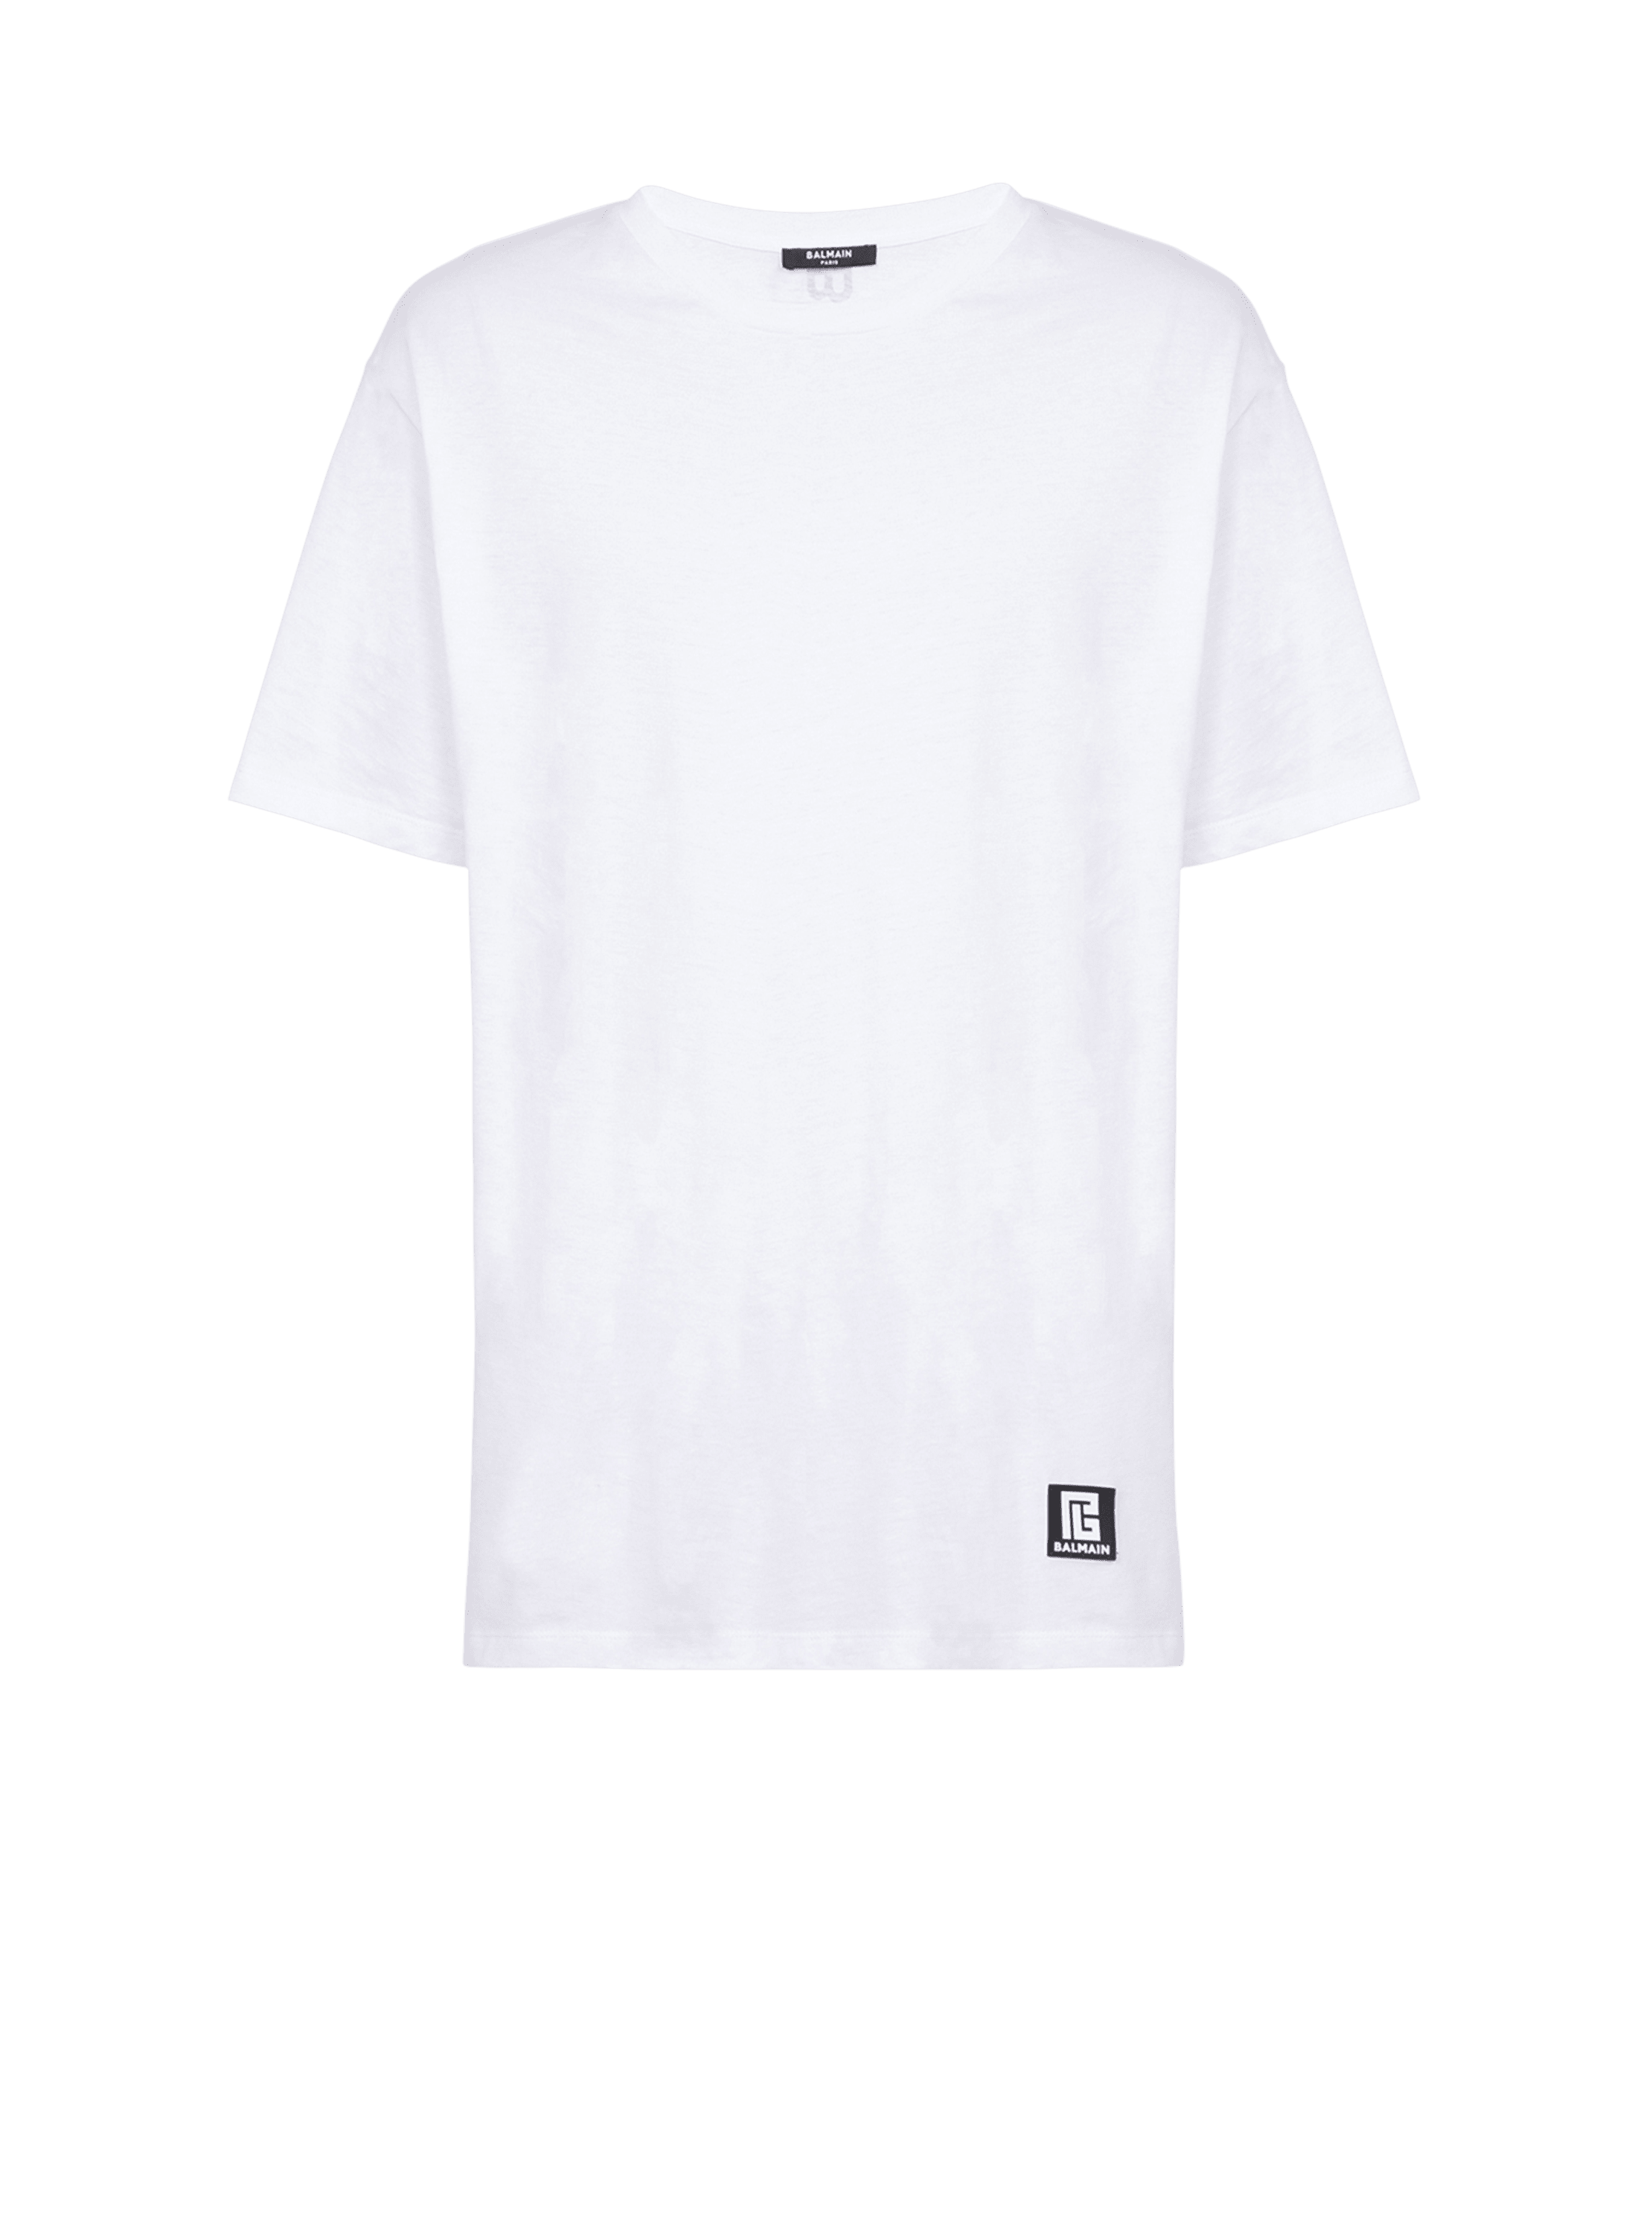 Oversized eco-designed cotton T-shirt with Balmain logo print, white, hi-res